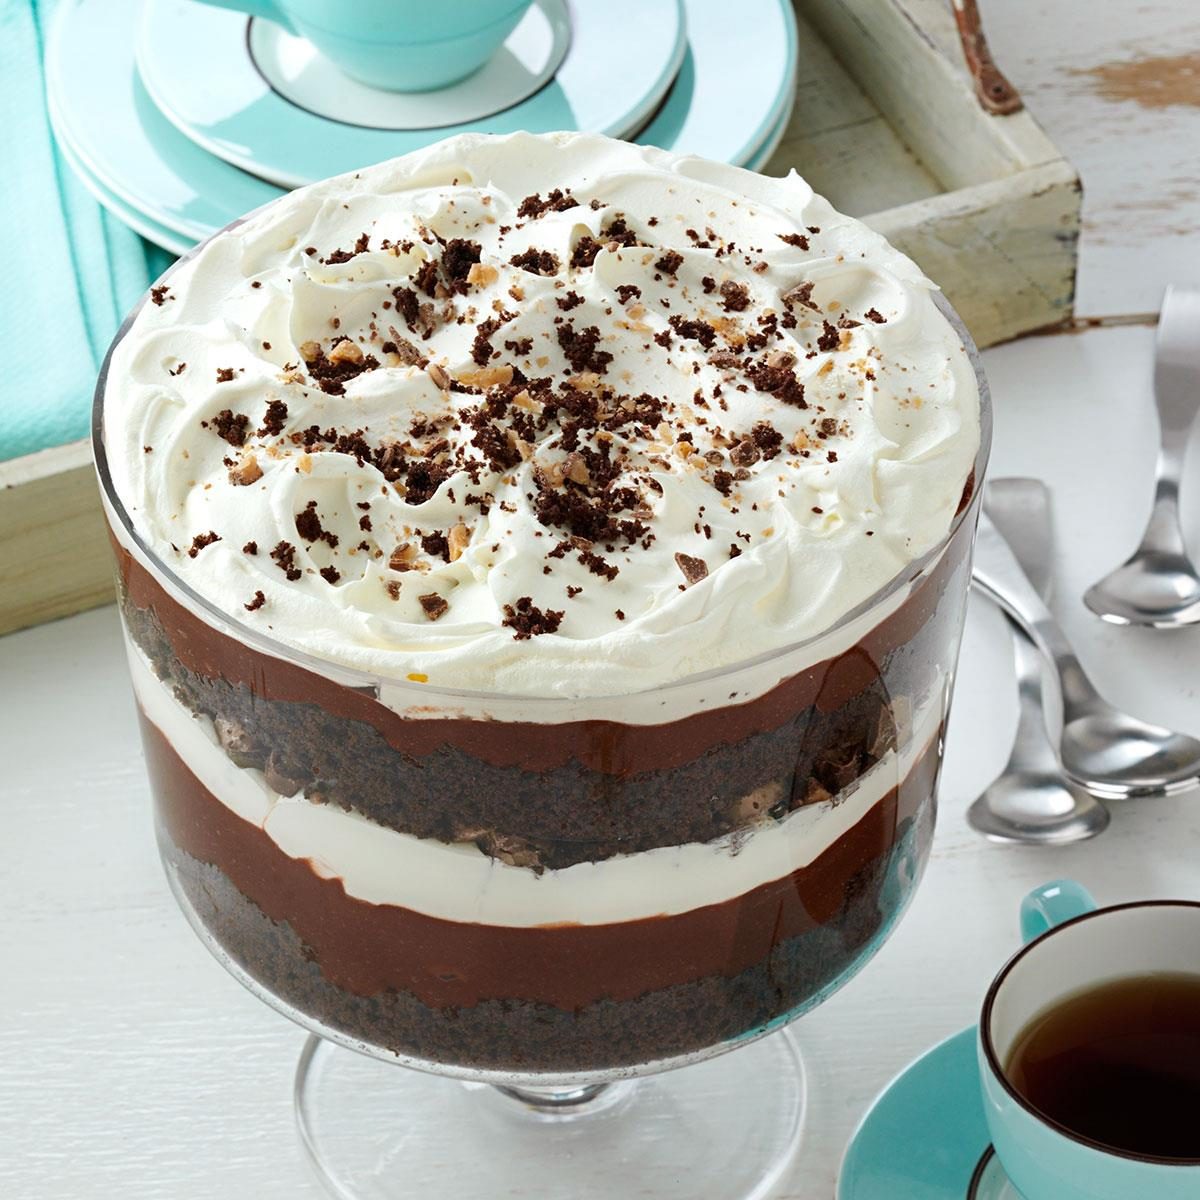 Chocolate Trifle Recipe: How to Make It